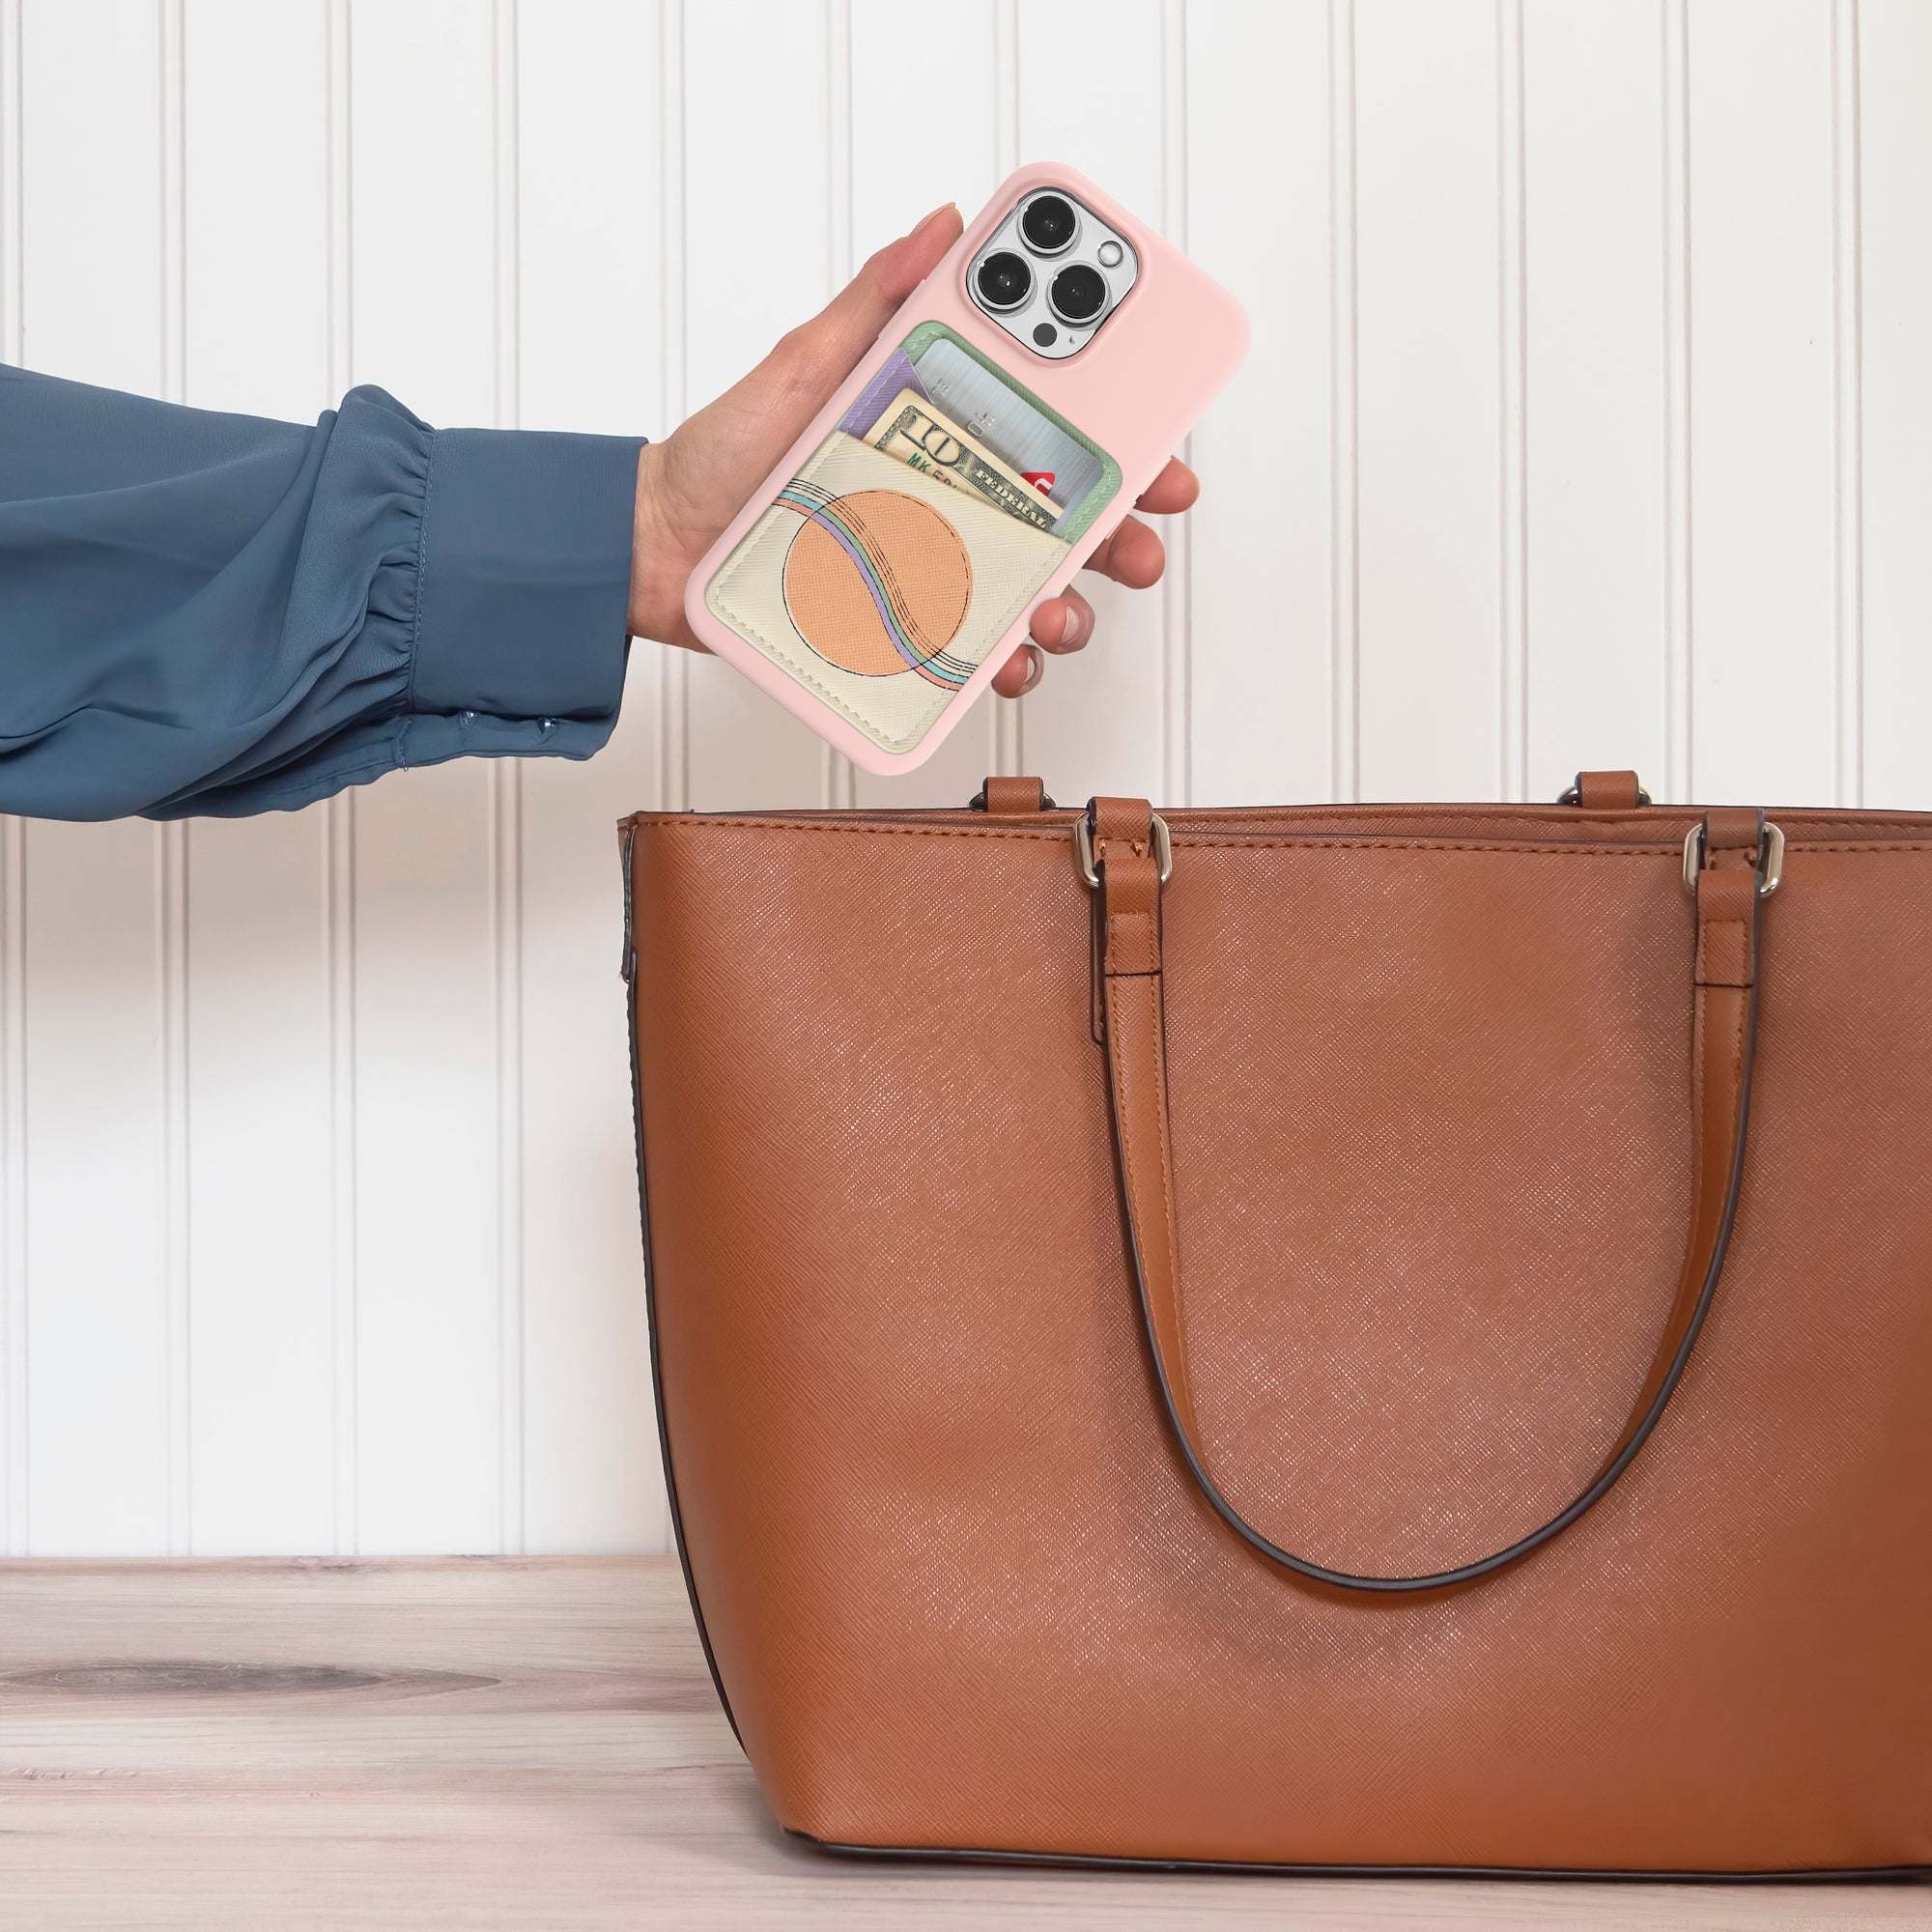 NFI essentials Women's Mobile Cell Phone Holder Pocket Wallet Hand Purse  Clutch Crossbody Sling Bag